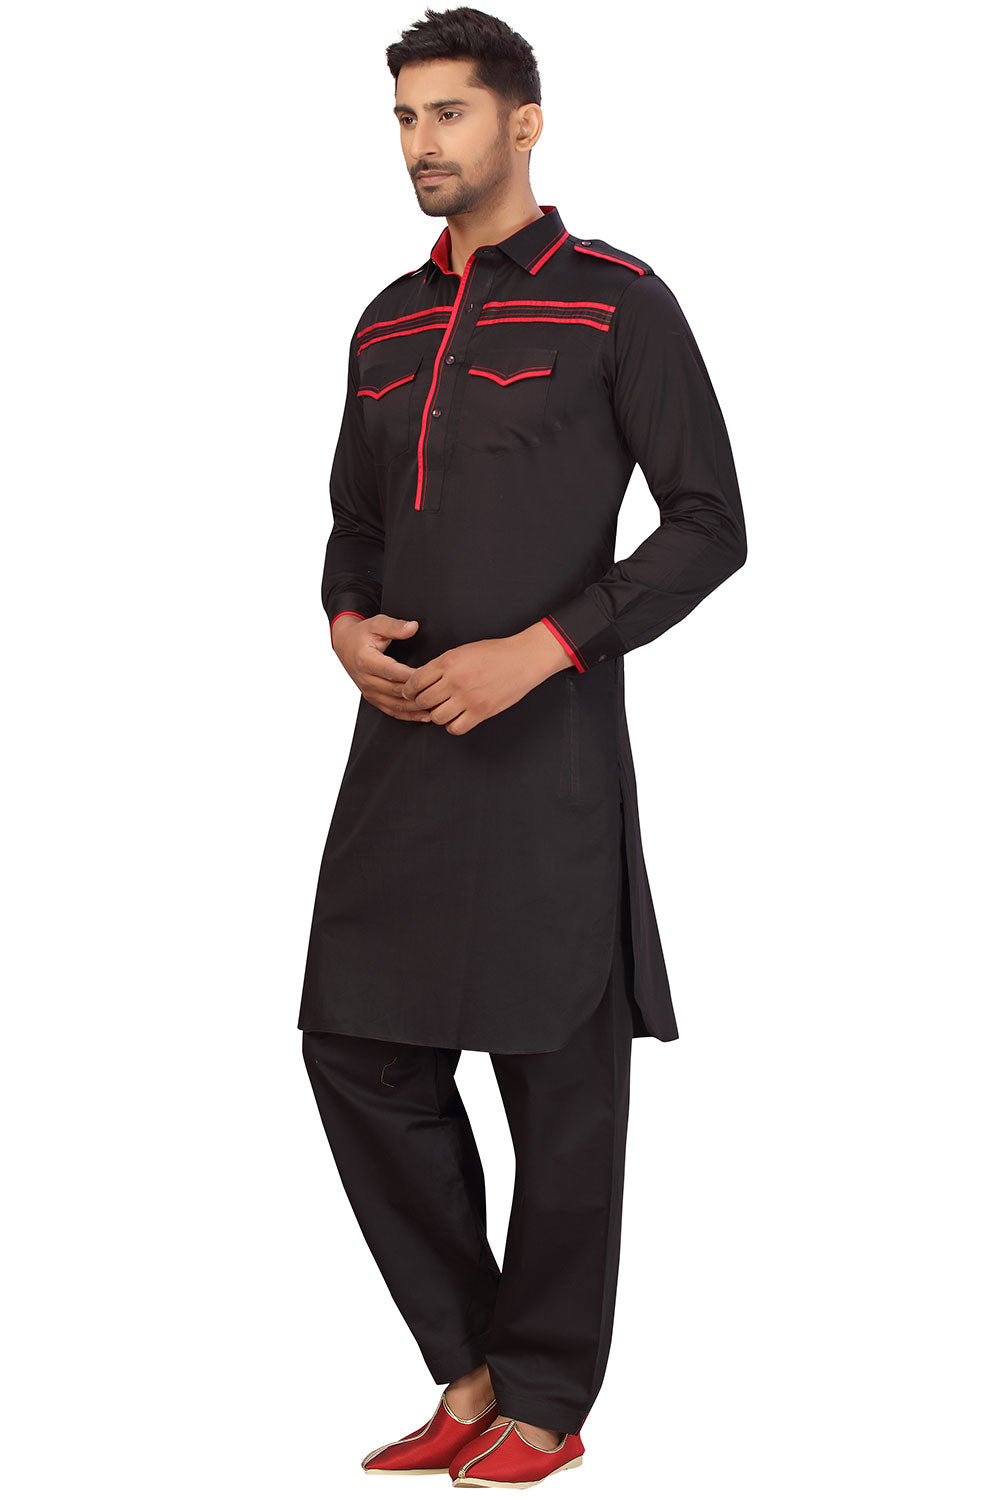 Buy Men's Blended Cotton Solid Pathani Set in Black Online - Zoom In